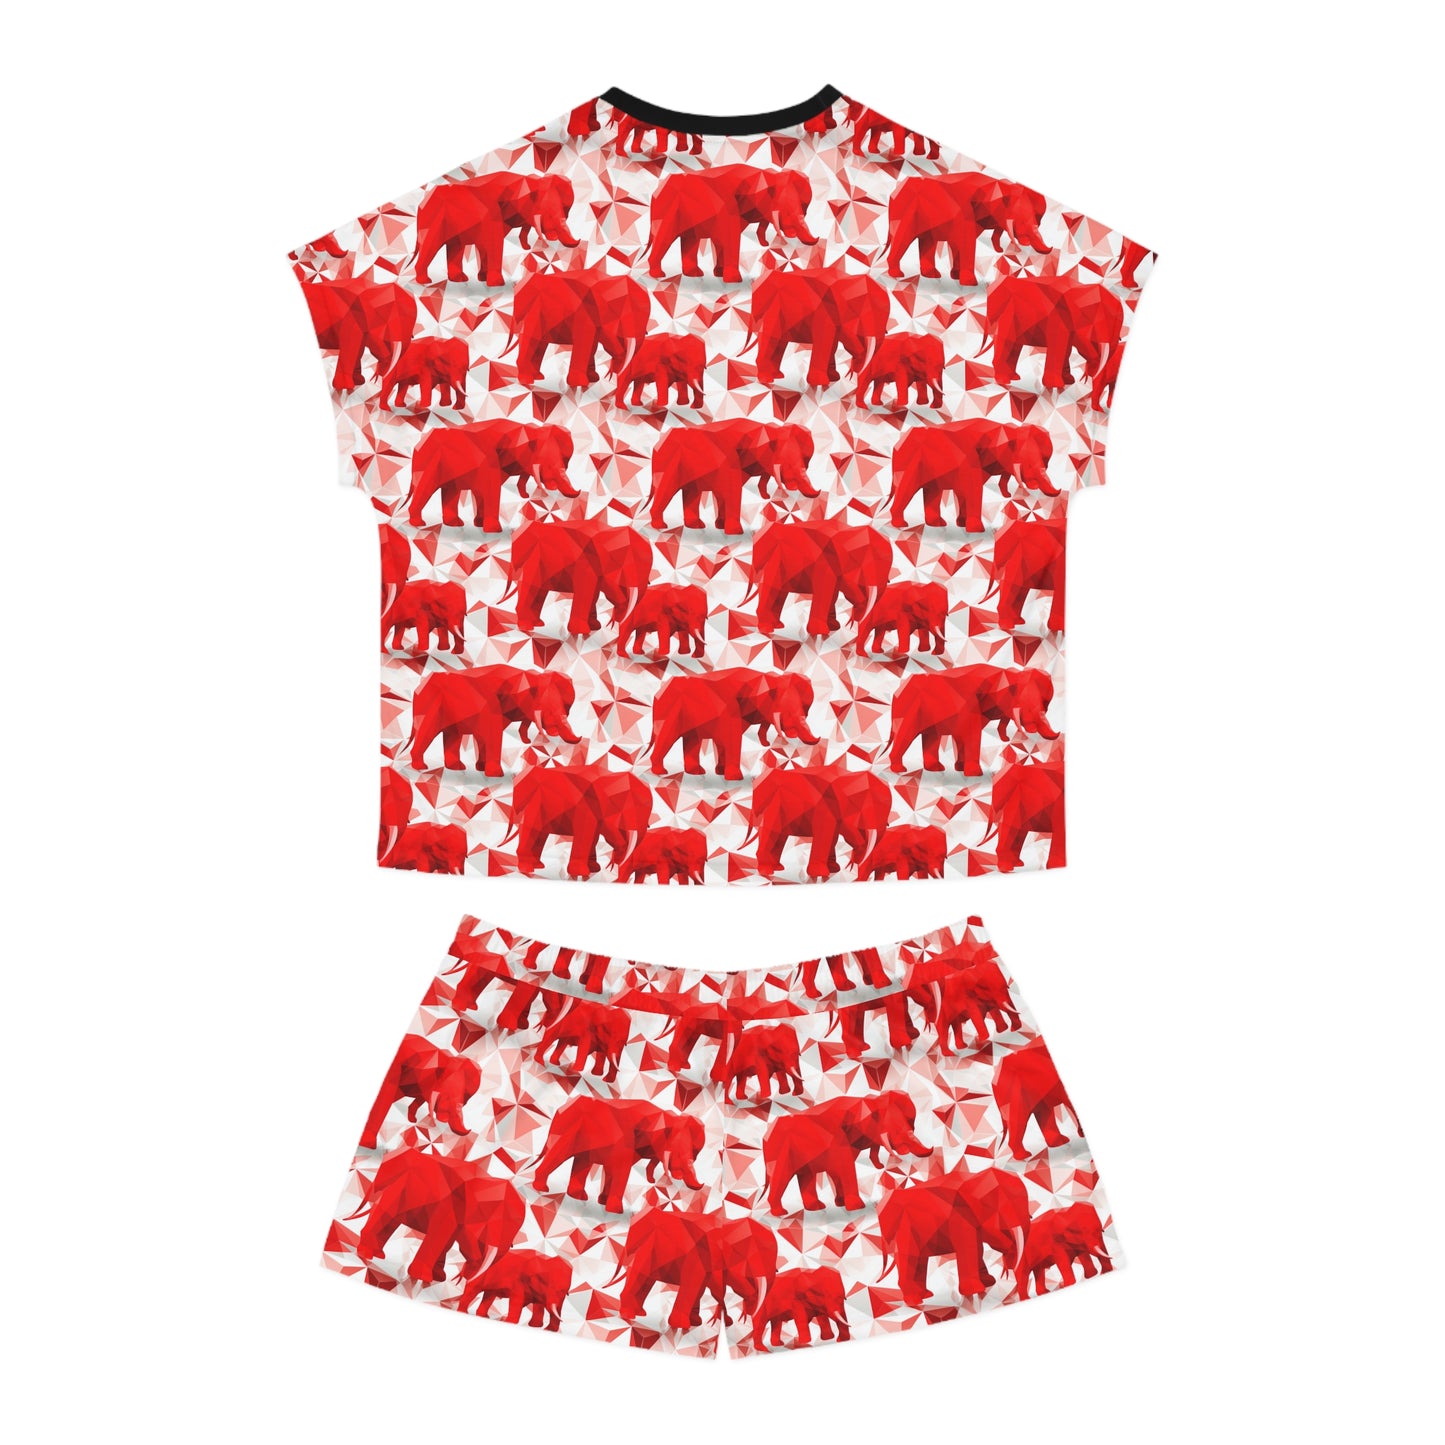 Elephants & Pyramids Women's Short Pajama Set